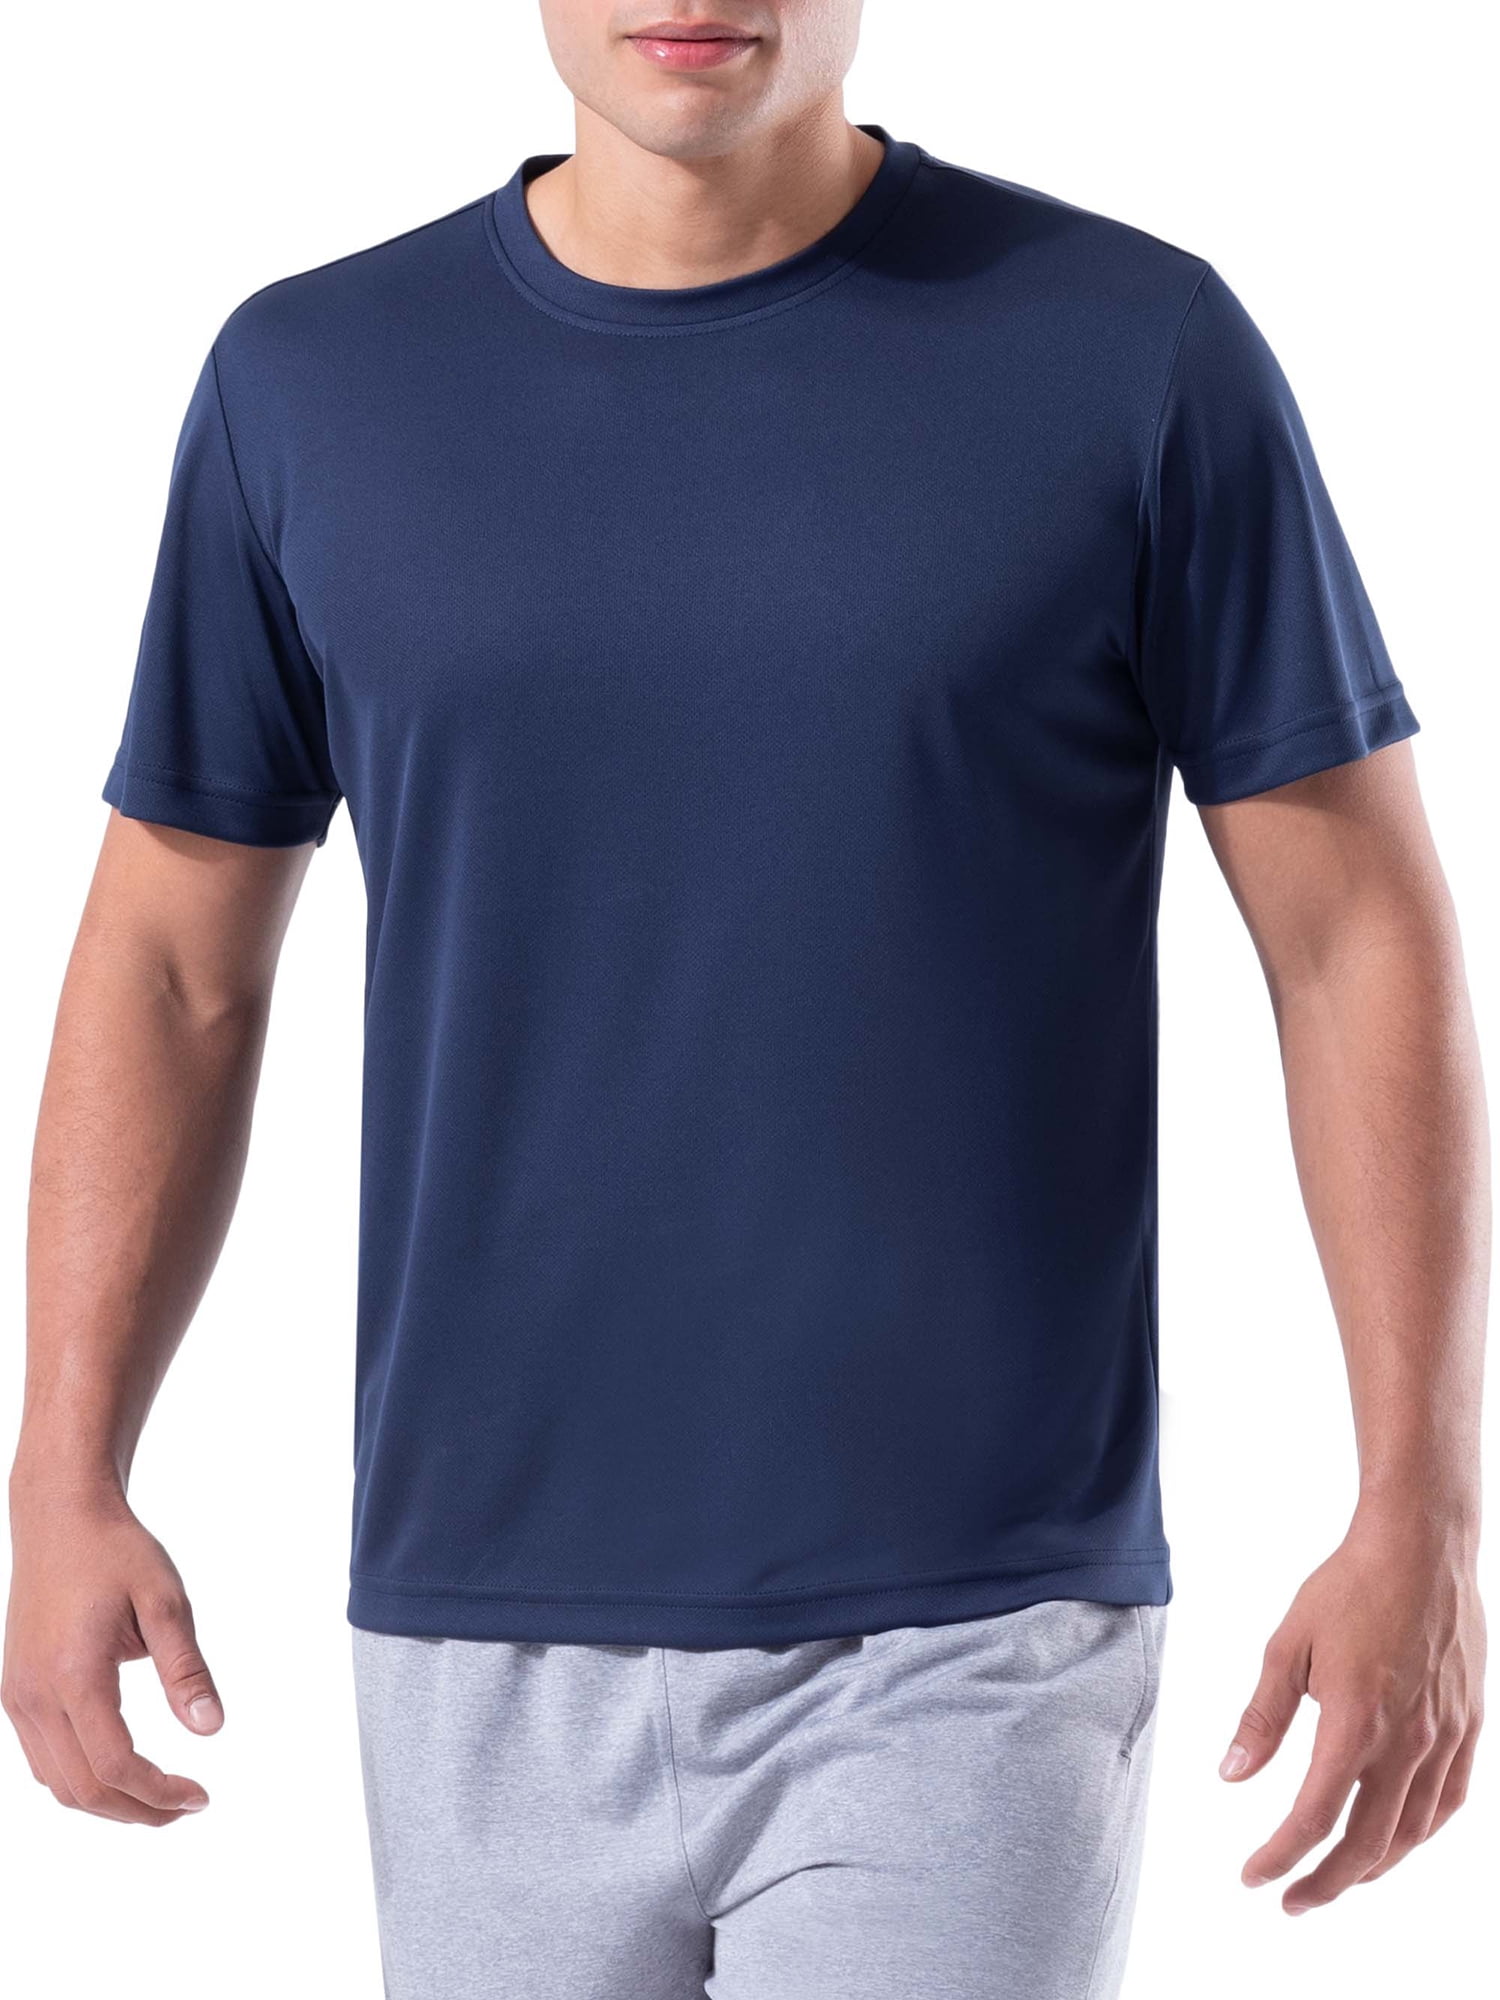 Athletic Works Men's Active Core Short Sleeve T-Shirt, Size S-3XL